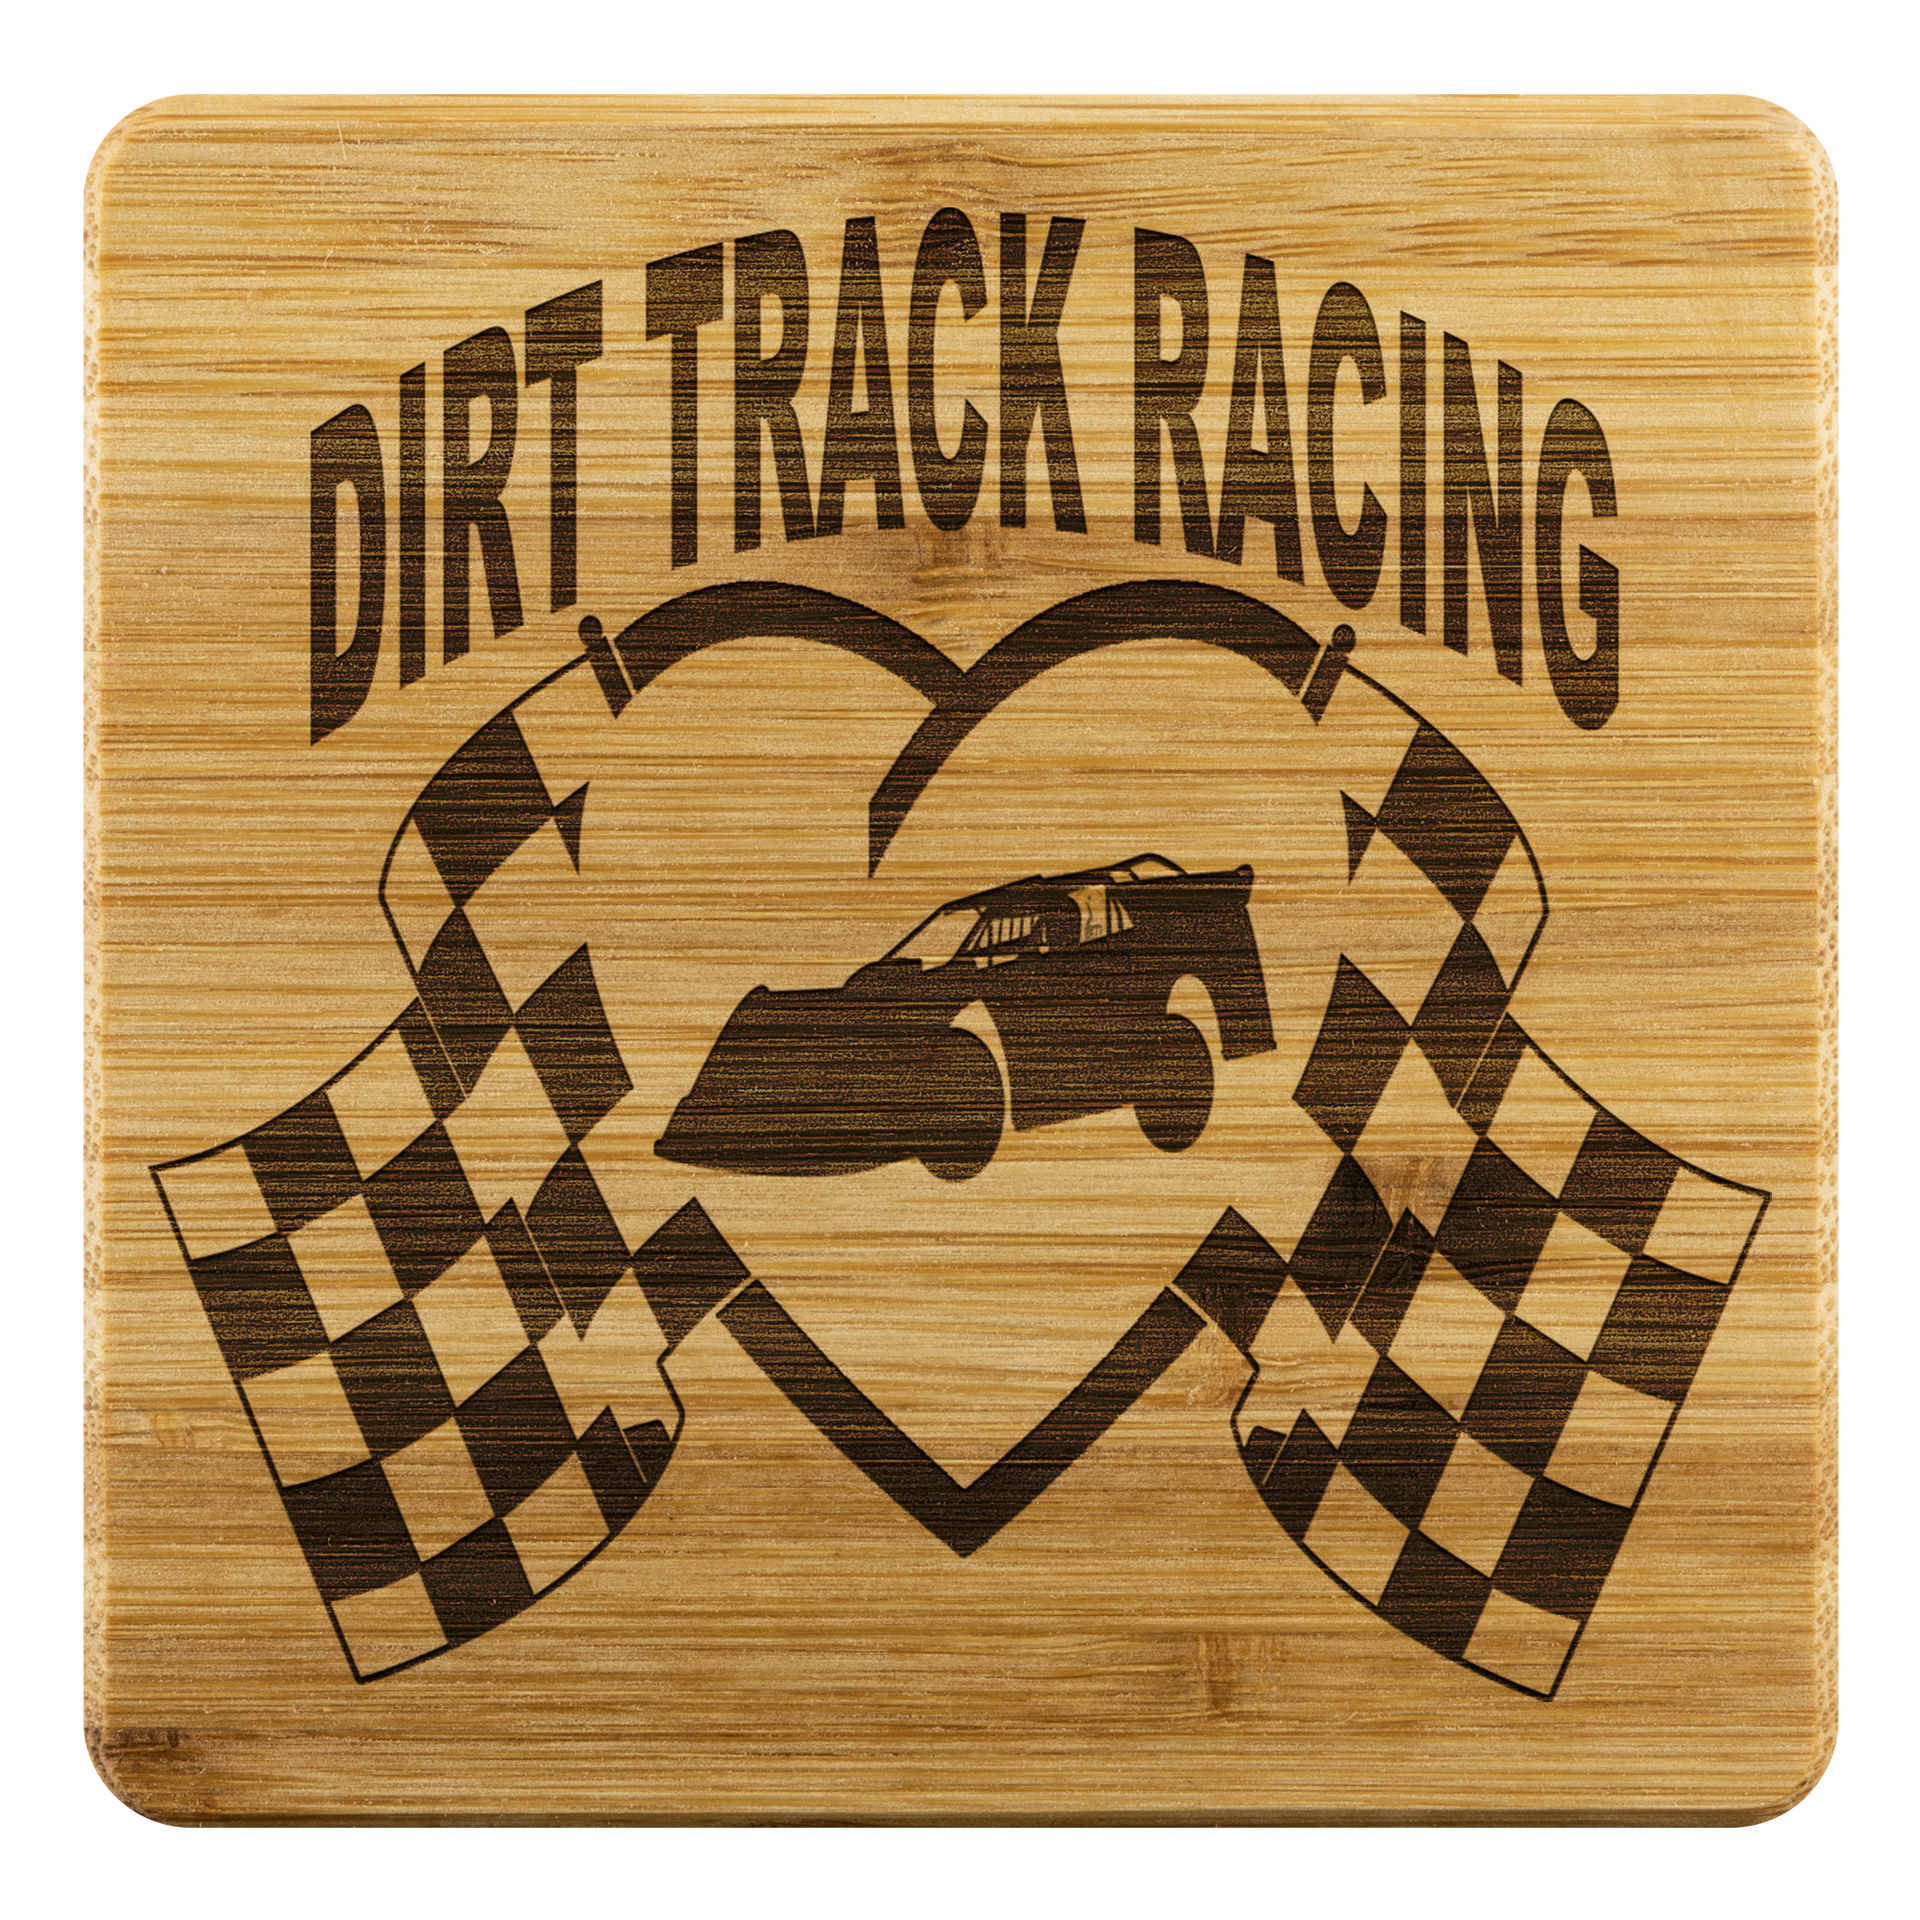 Dirt Track Racing Late Model Bamboo Coaster